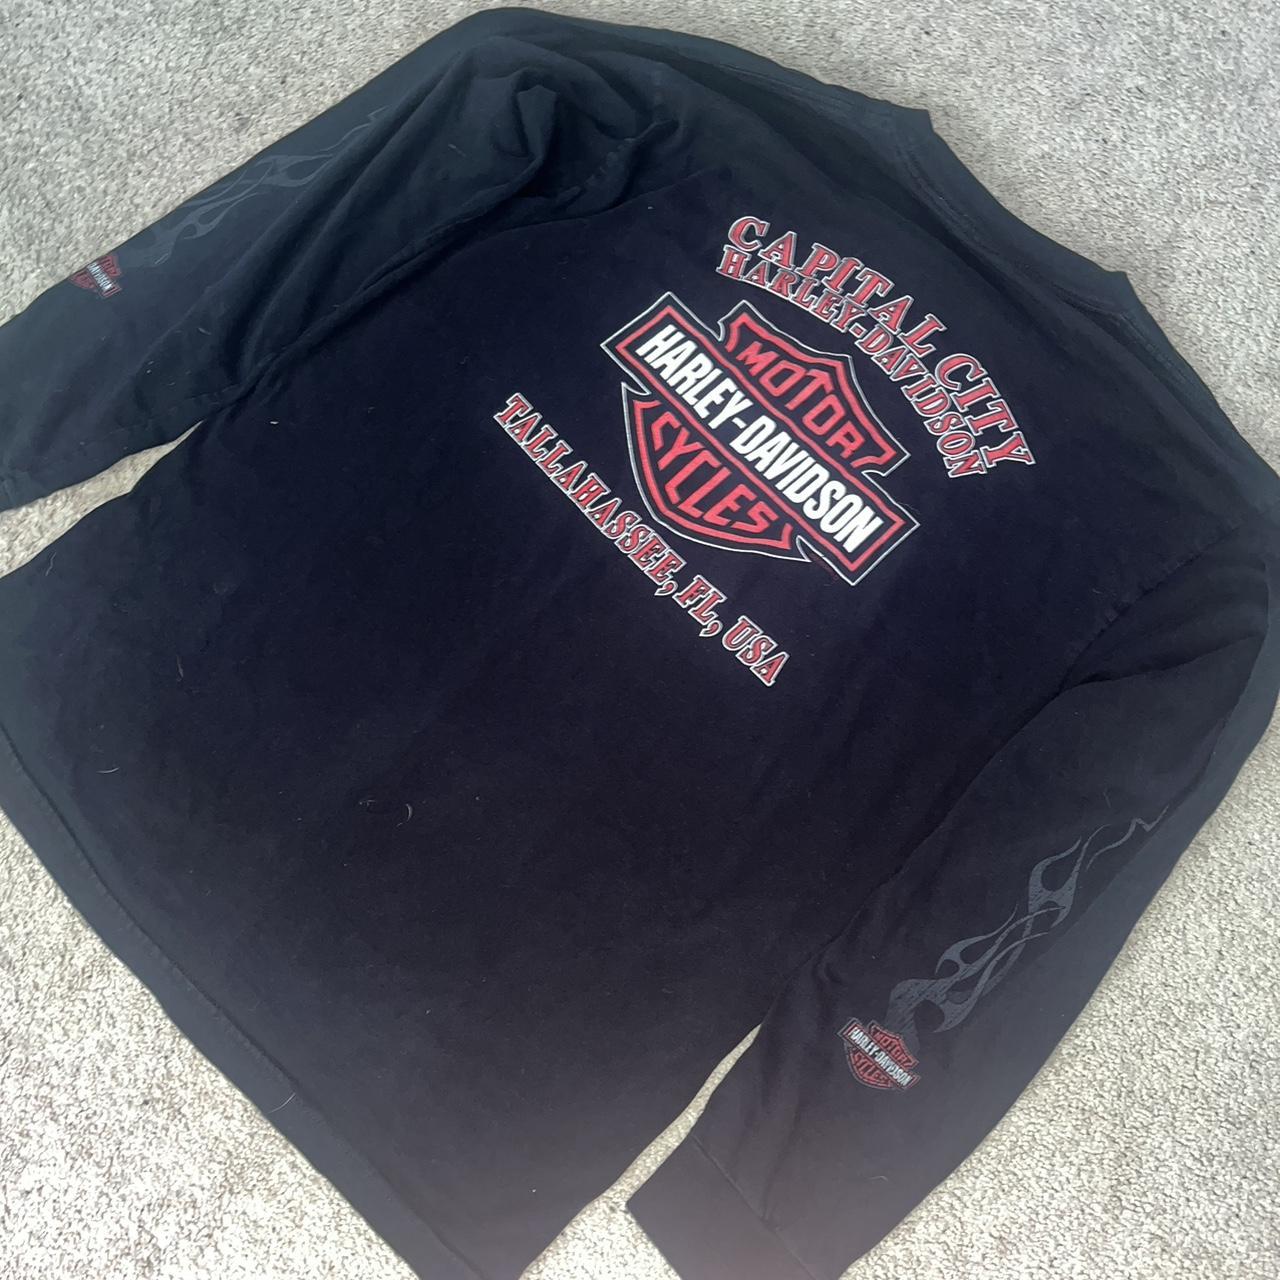 Harley Davidson long sleeve shirt 😱WILL BE SHIPPED... - Depop